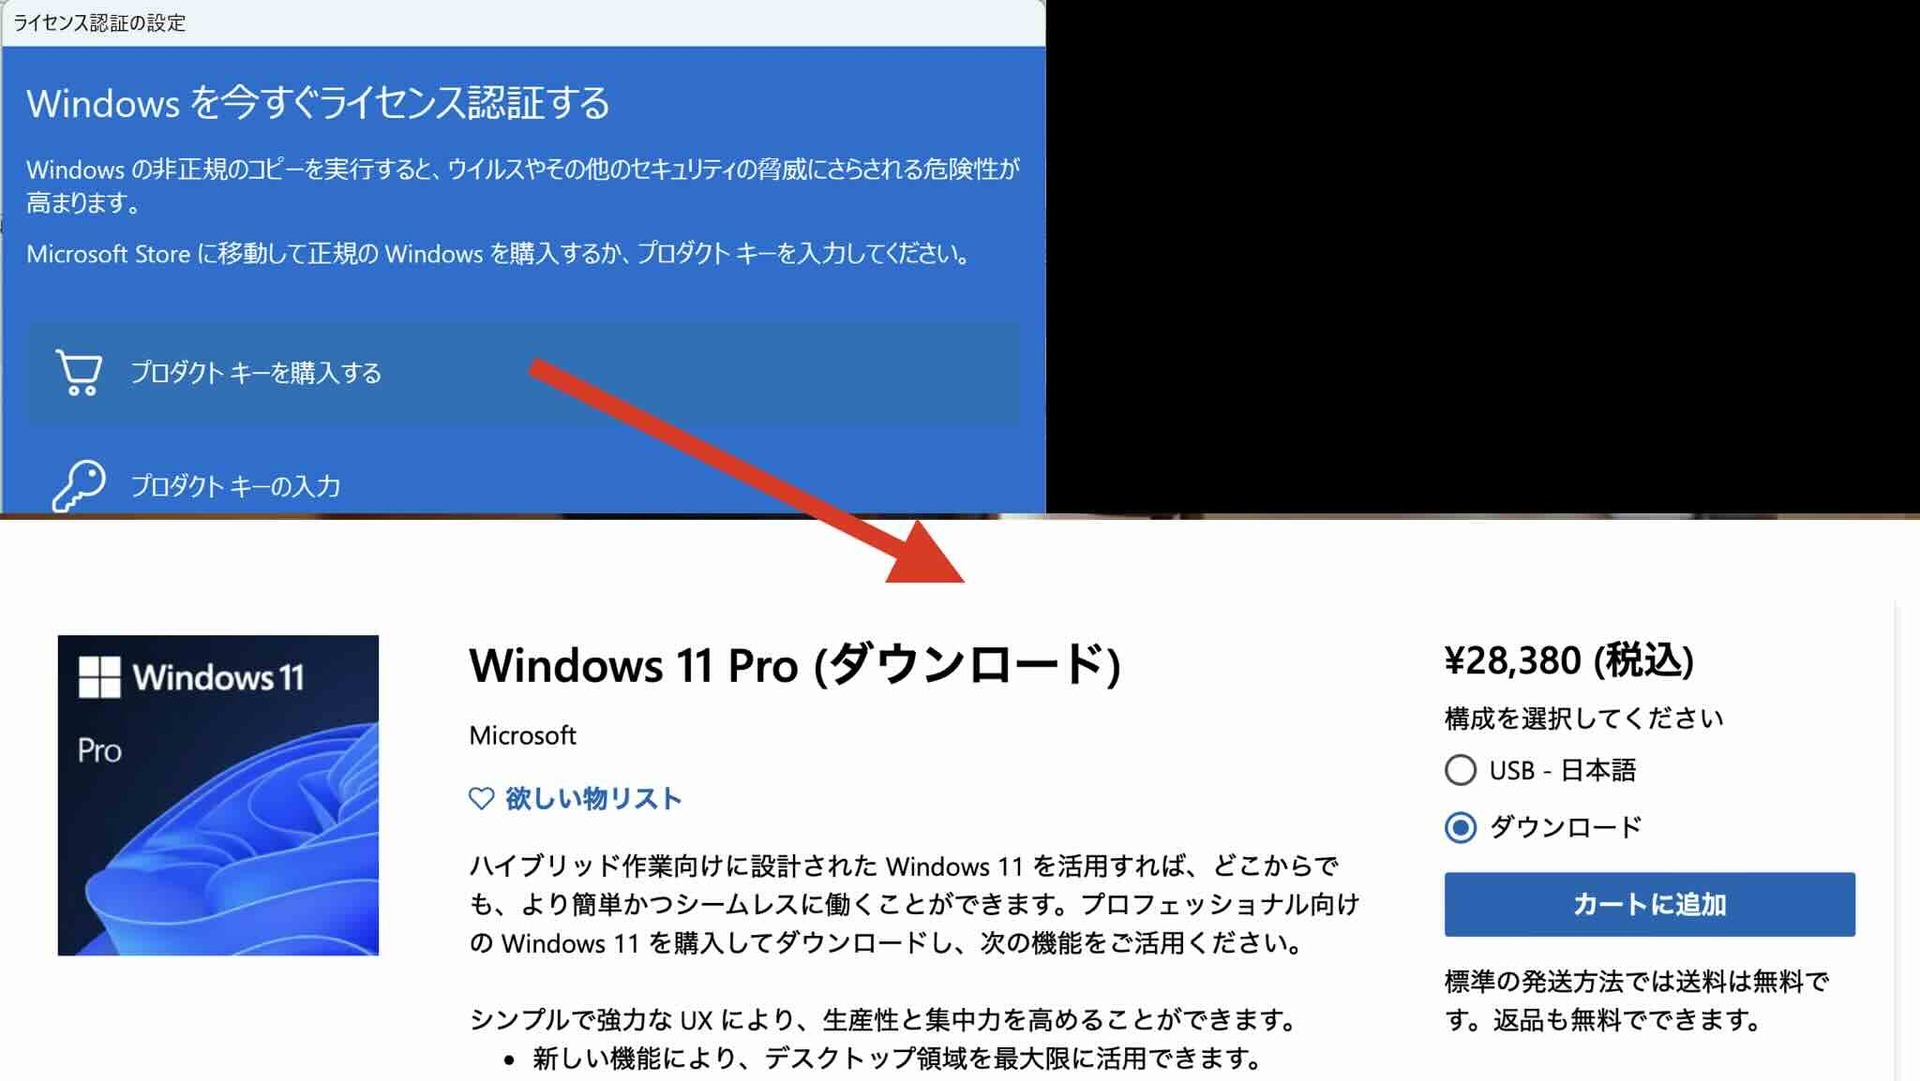 windows11-pro-arm-price.jpg